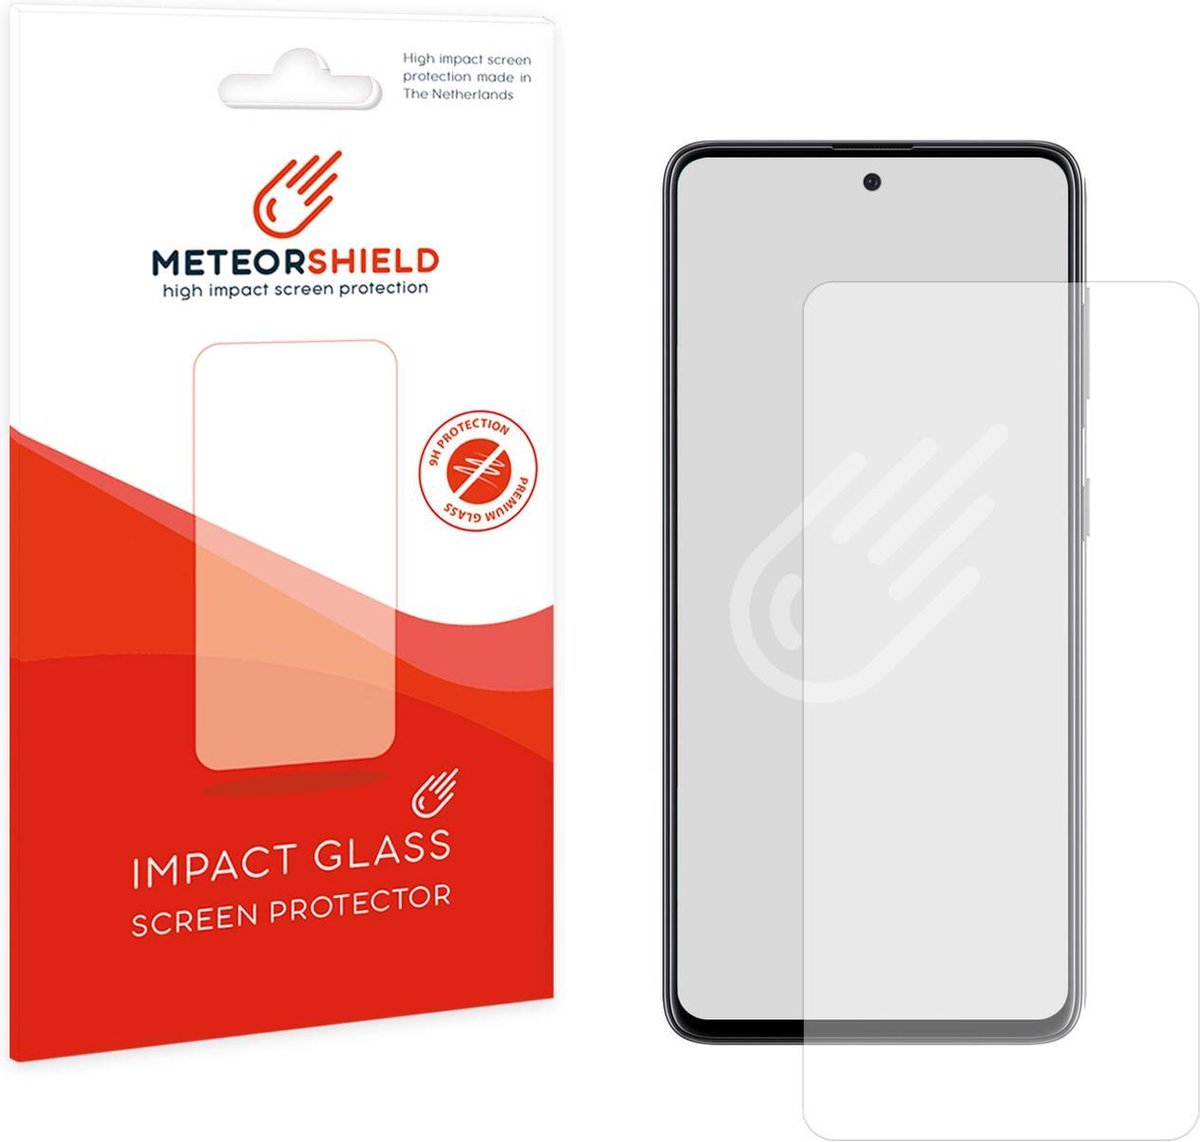 Meteorshield Samsung Galaxy S20 FE screenprotector - Ultra clear impact glass